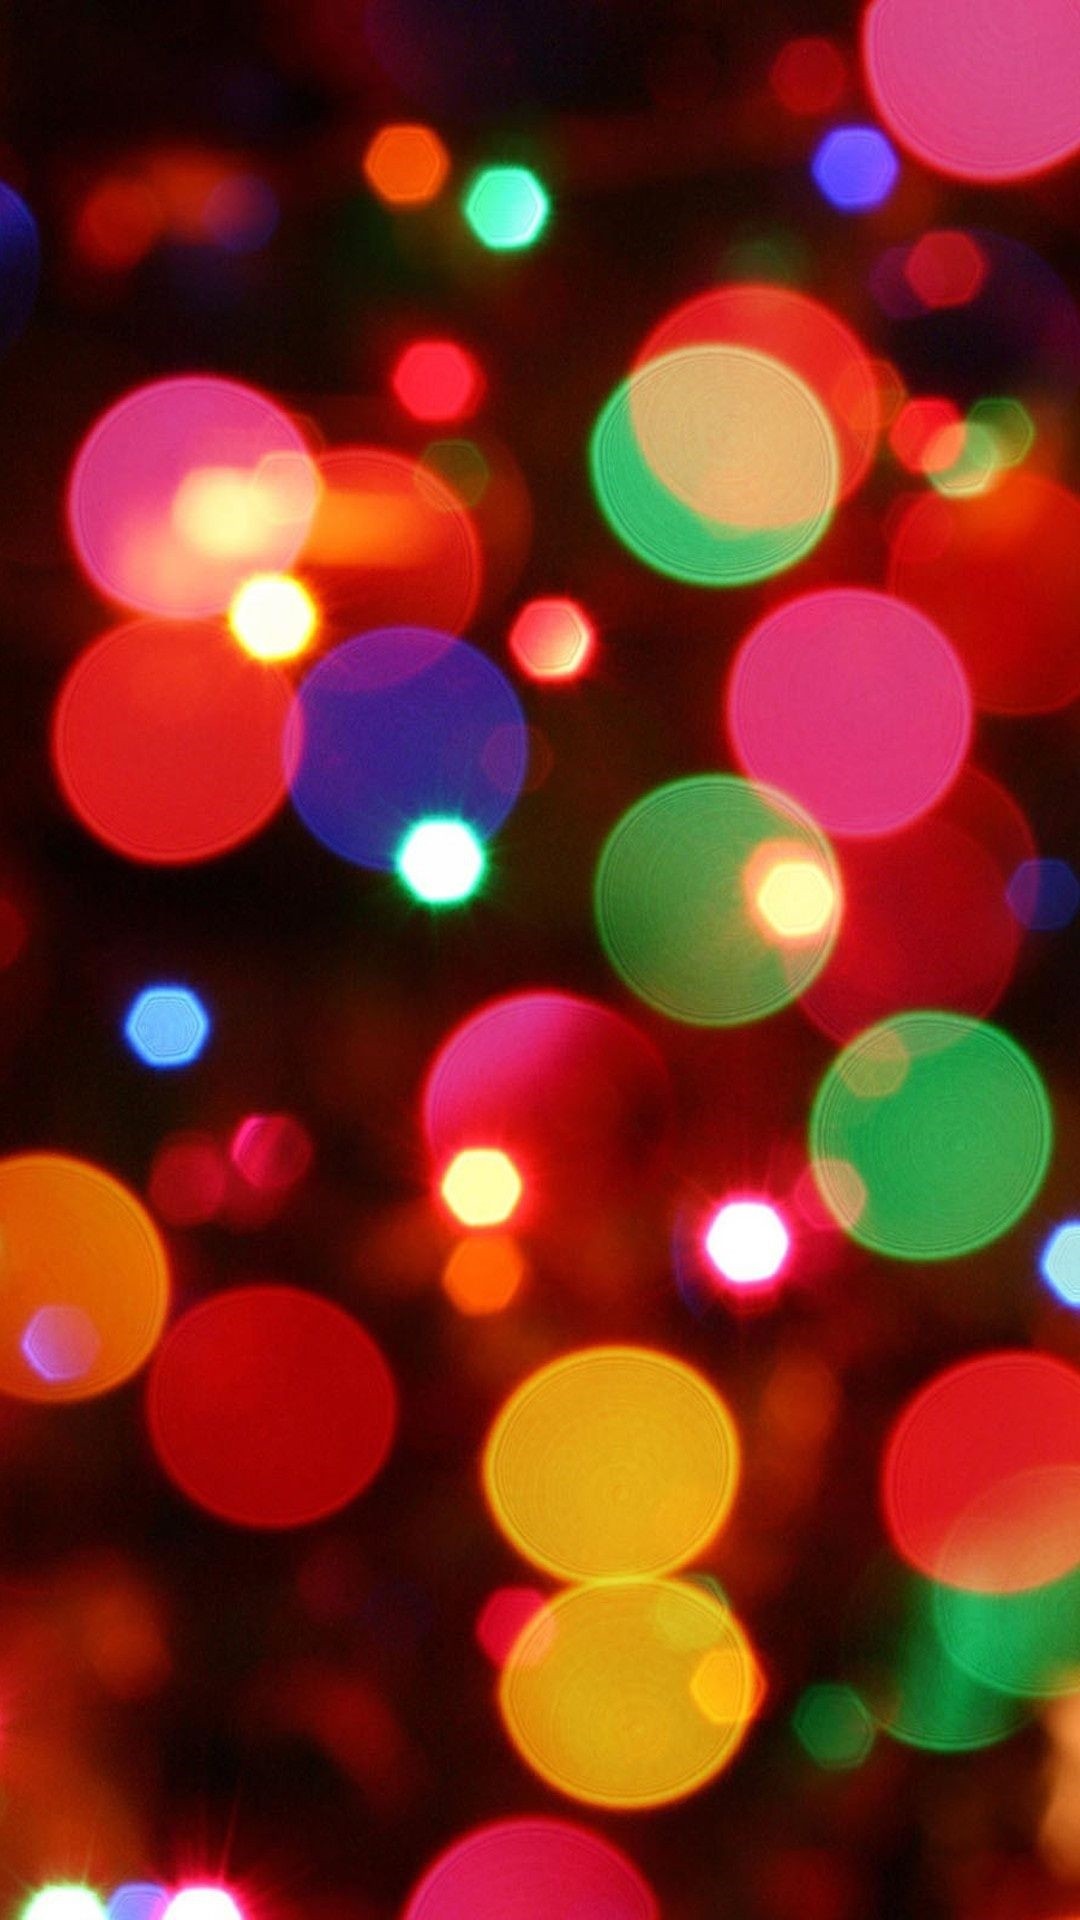 Christmas Lights iPhone wallpaper